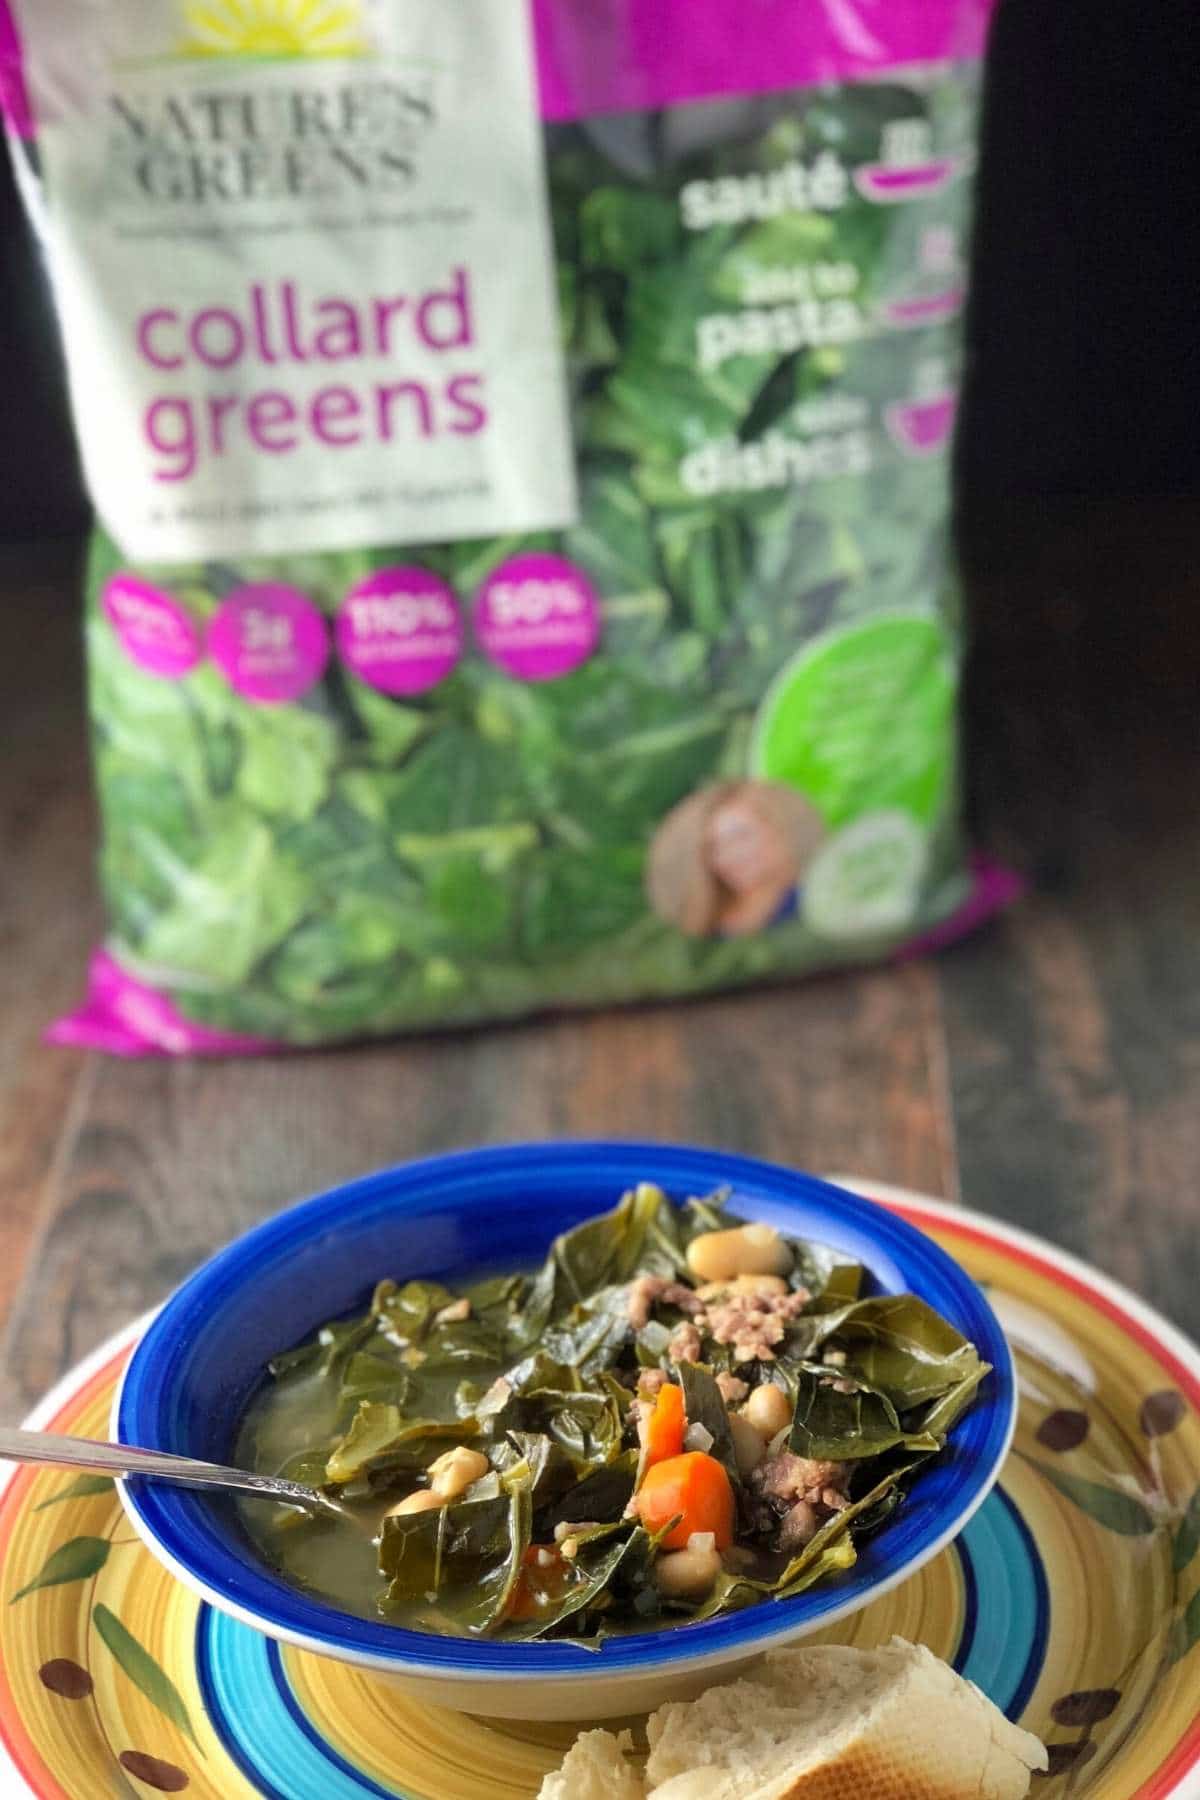 bag of Nature's Greens collard greens behind a bowl of soup